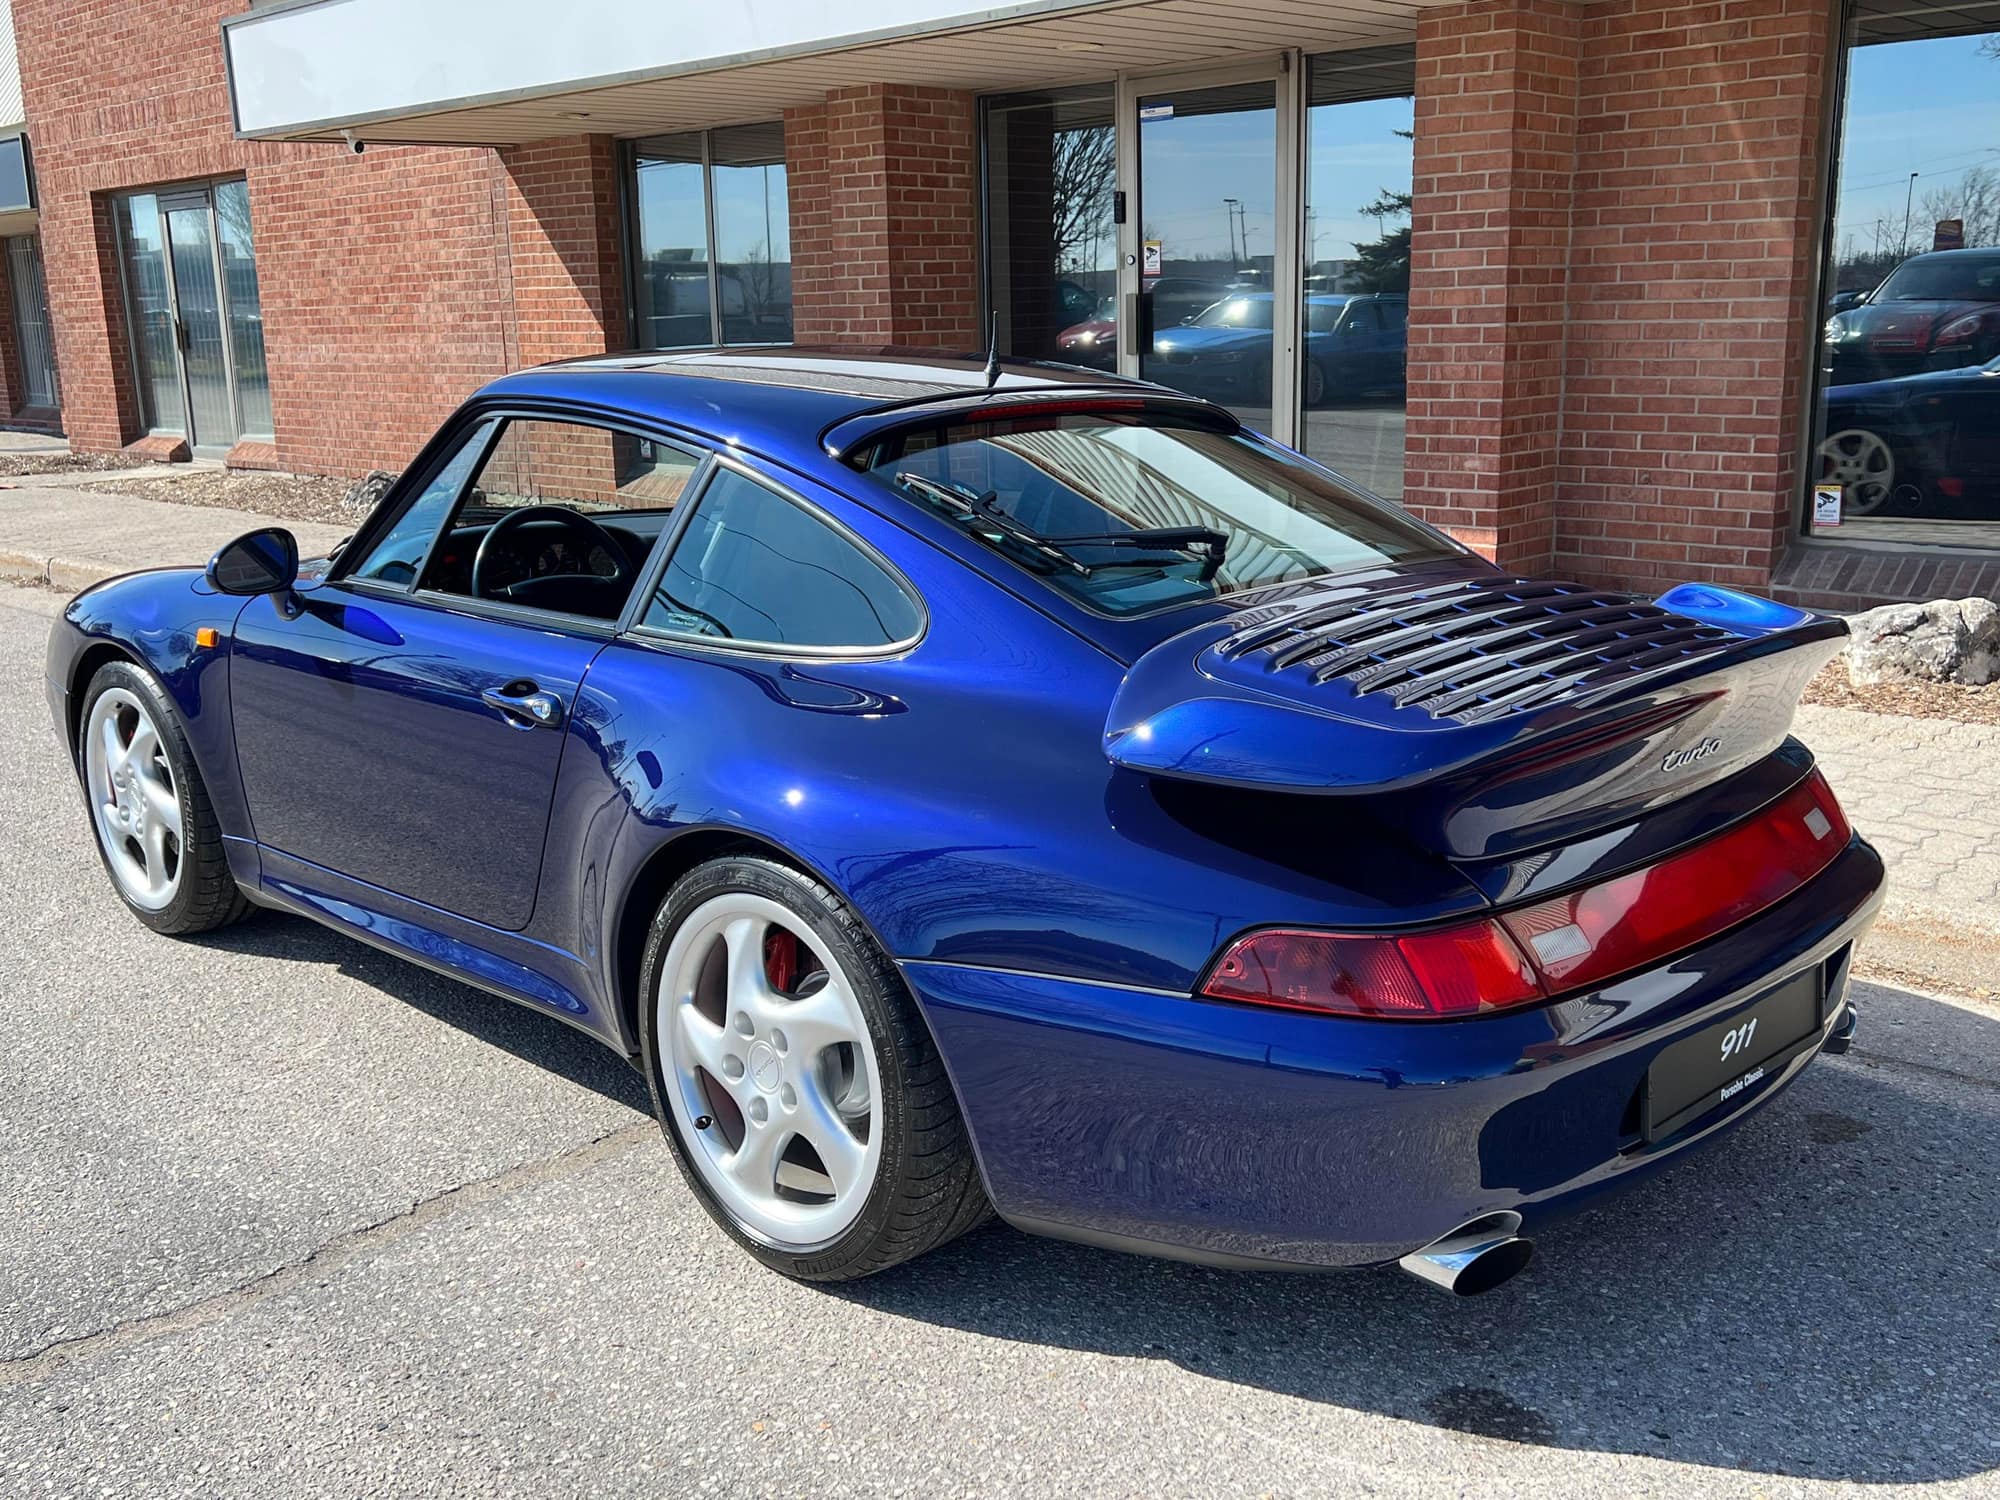 1996 Porsche 911 - 1996 Porsche 993 Turbo - 43k miles, X50 Powerkit, Iris Blue - Used - Detroit, MI 48236, United States